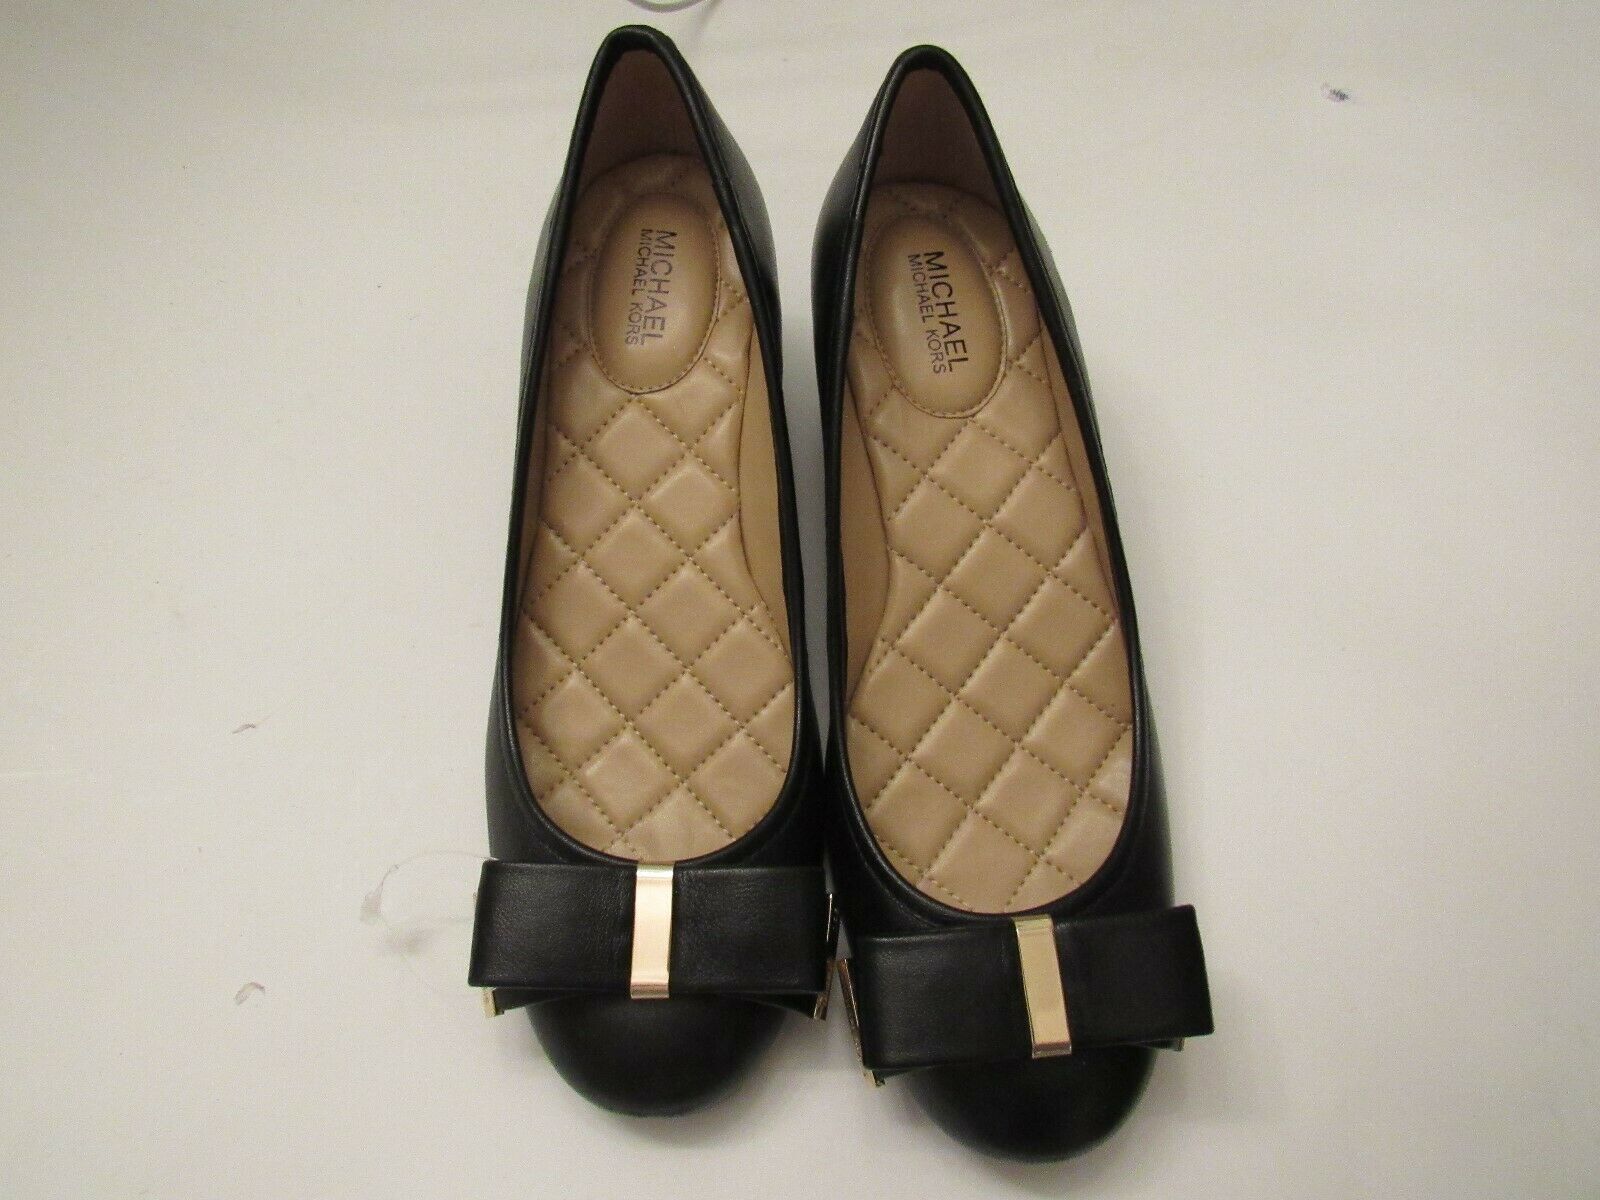 New/NO BOX Michael Kors black color leather upper slip-on/bow dress shoes 6M